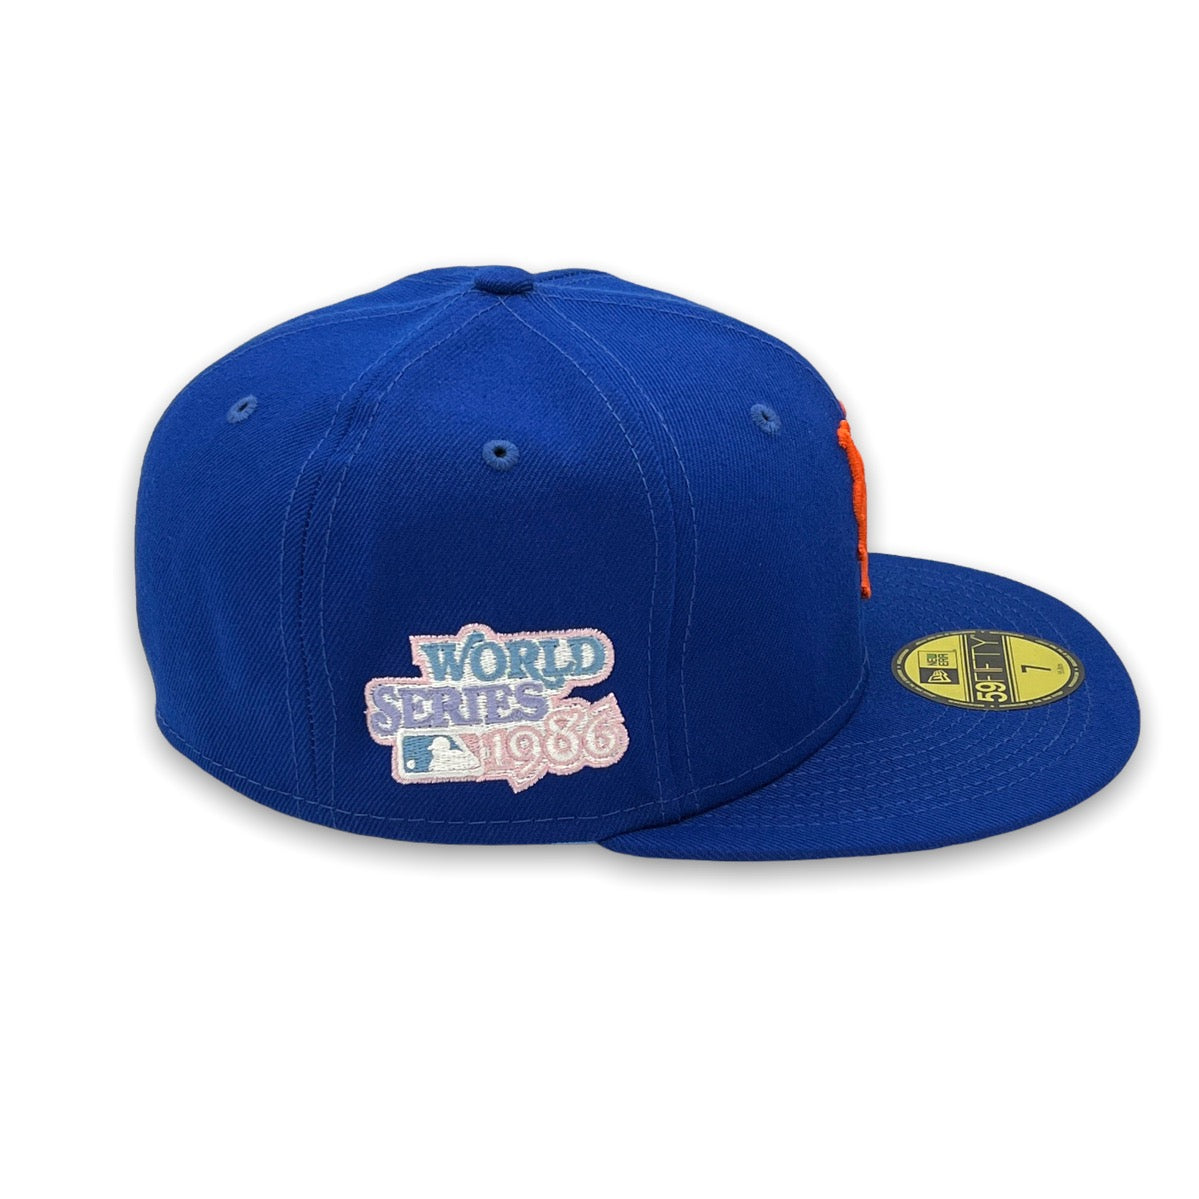 Sky Blue New York Mets Shea Stadium 5950 New Era Fitted Hat – Sports World  165